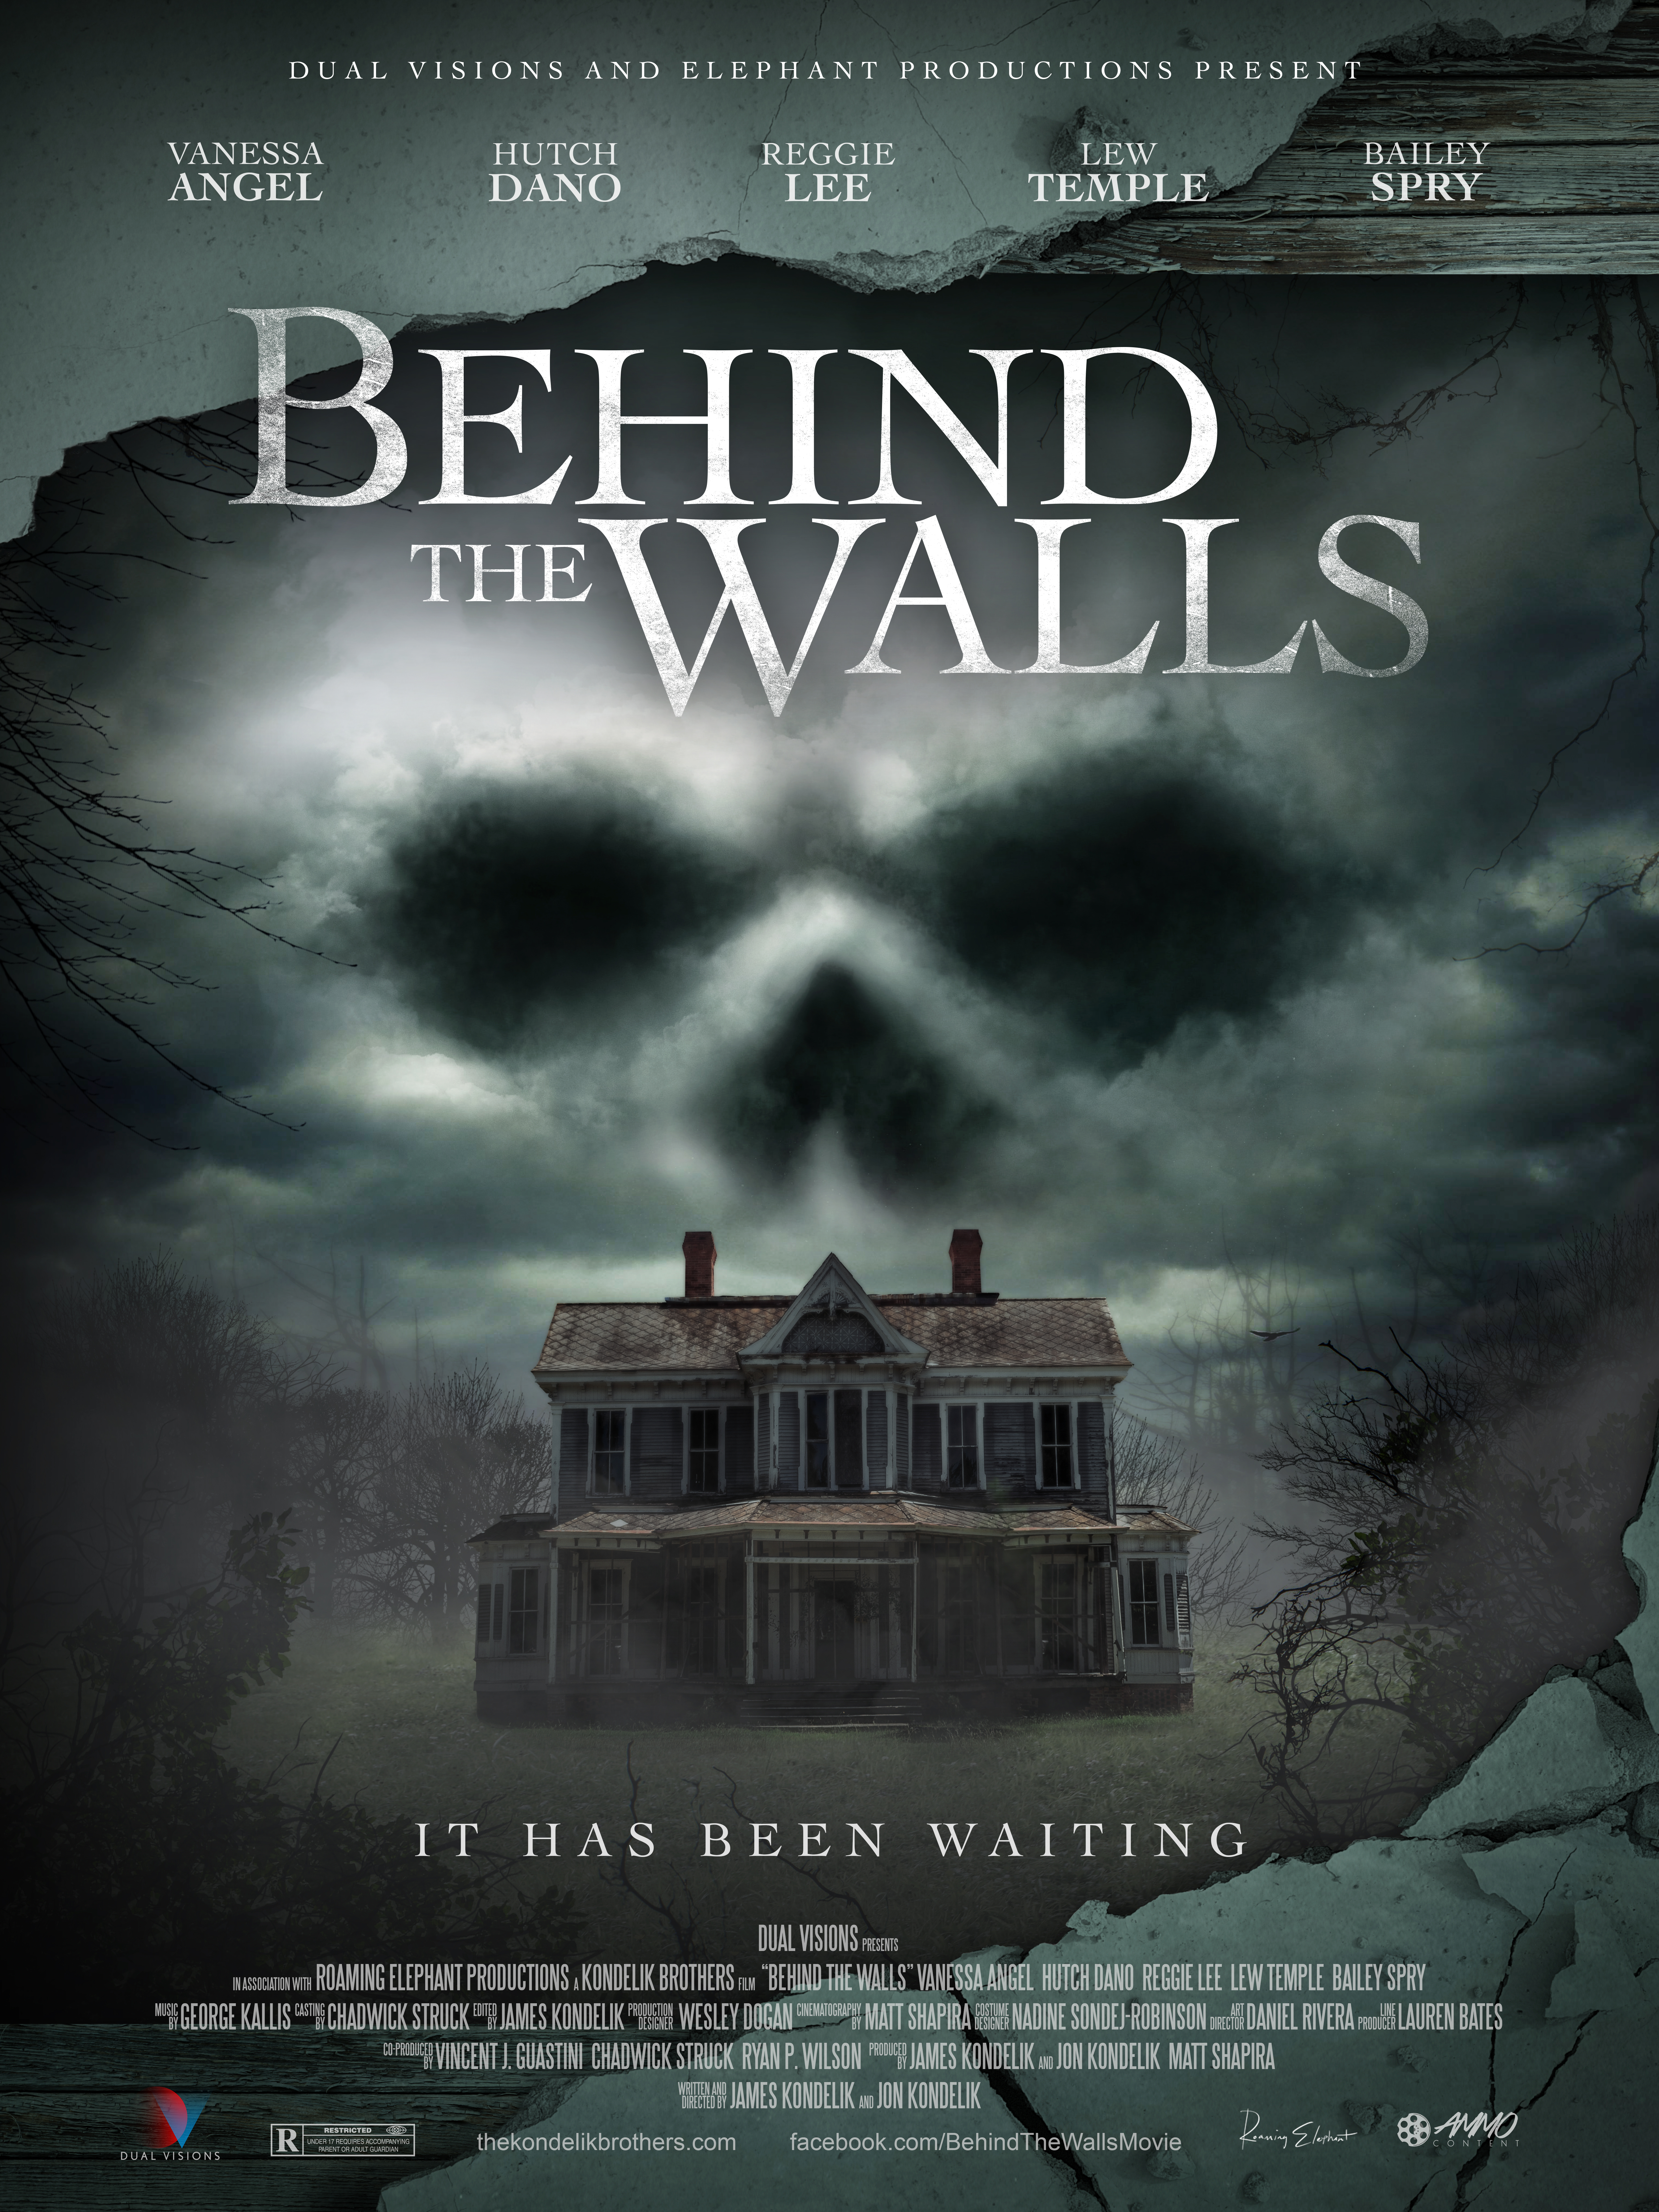 Nonton film Behind the Walls layarkaca21 indoxx1 ganool online streaming terbaru